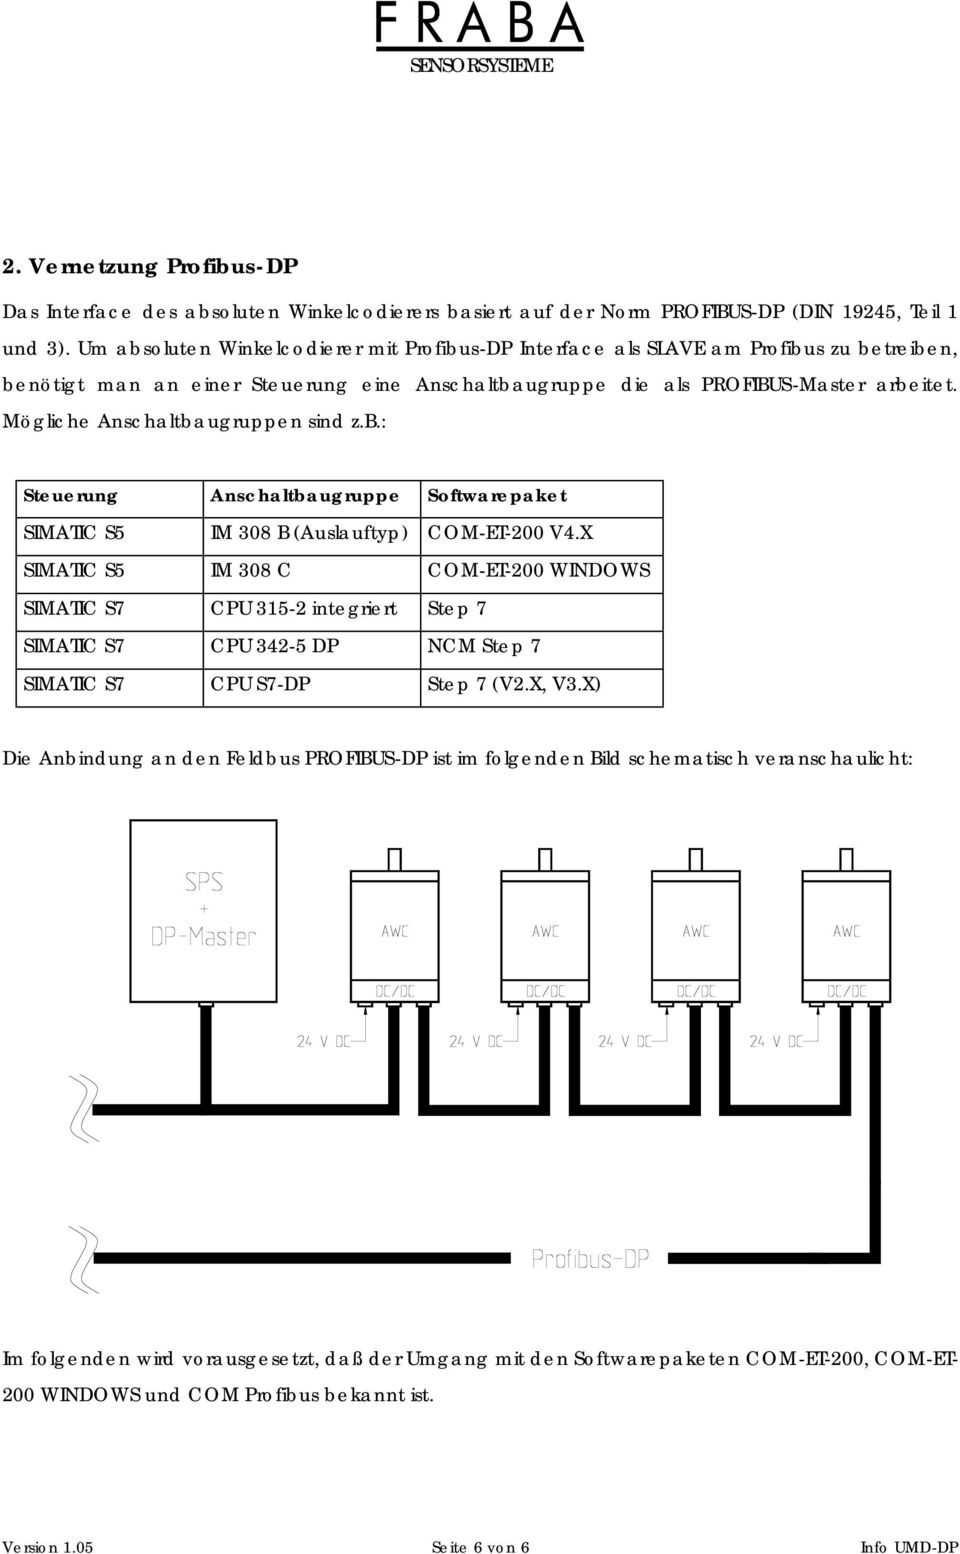 Mögliche Anschaltbaugruppen sind z.b.: Steuerung Anschaltbaugruppe Softwarepaket SIMATIC S5 IM 308 B (Auslauftyp) COM-ET-200 V4.